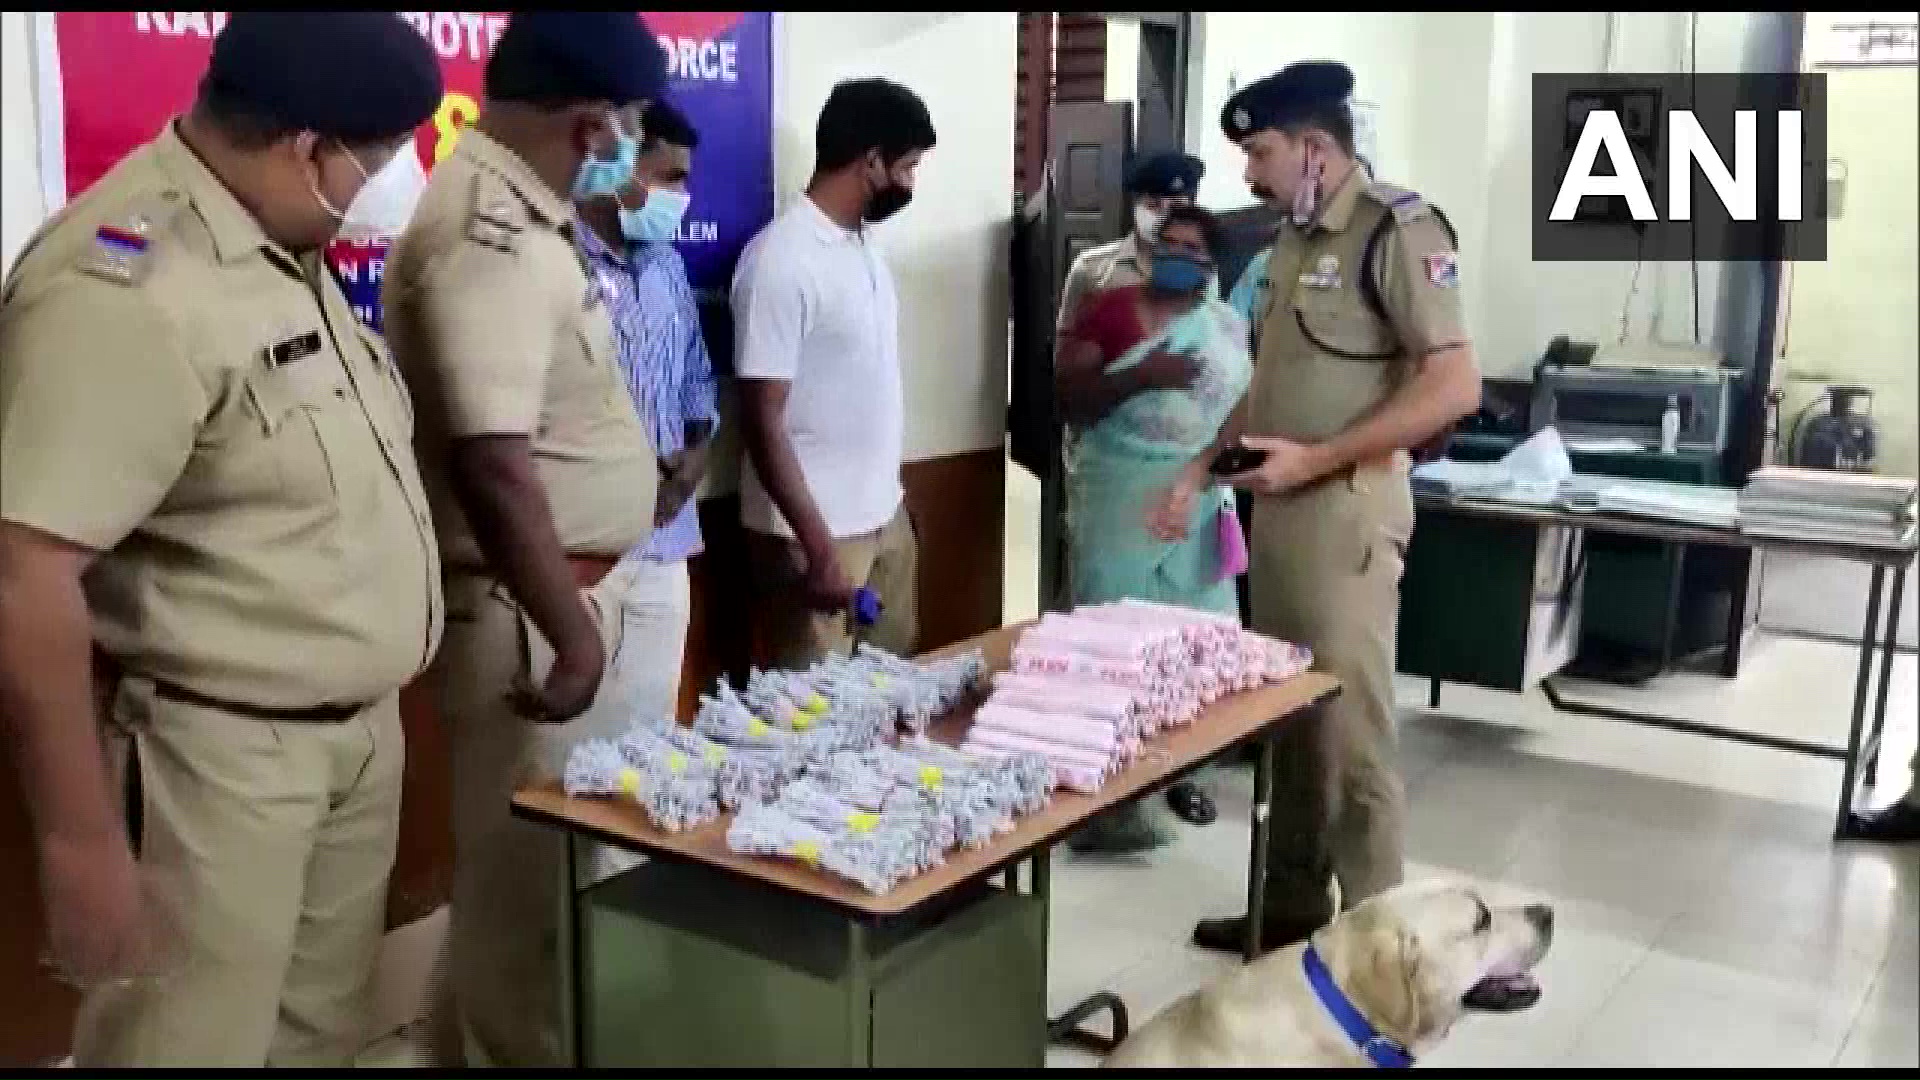 117 gelatin sticks, 350 detonators seized at Kozhikode railway station